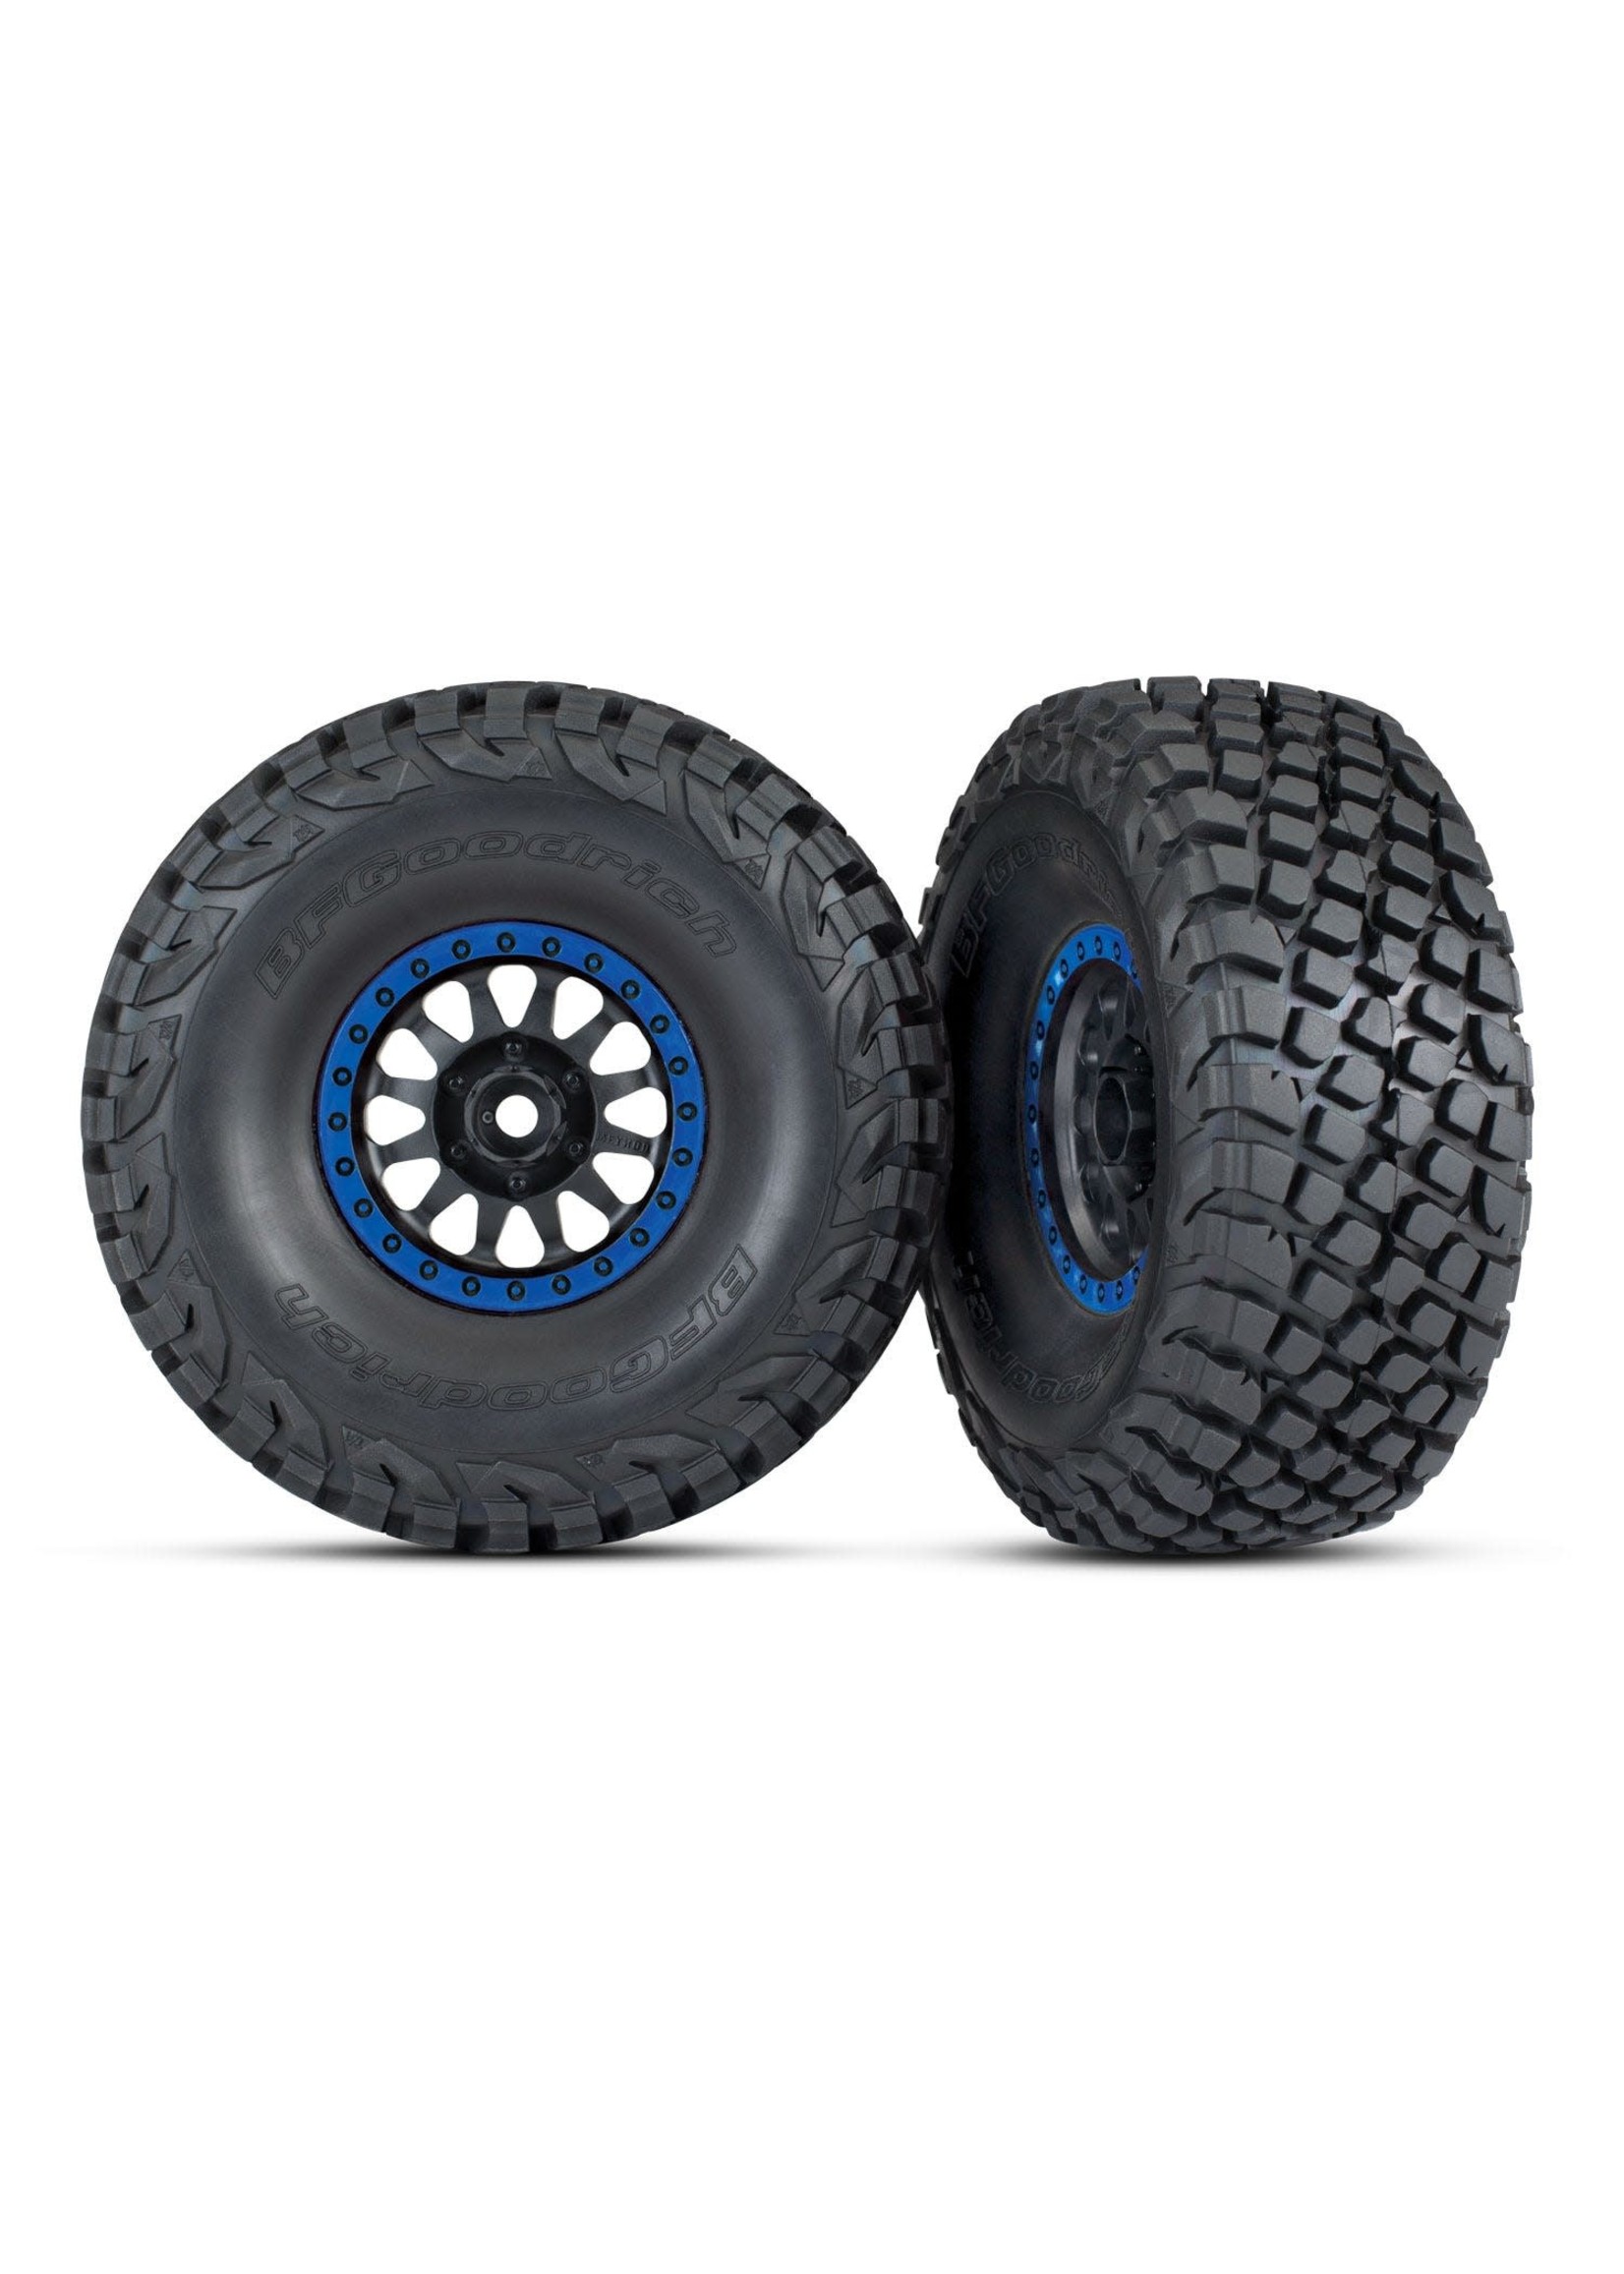 Traxxas TRA8474X Traxxas Tires and wheels, assembled, glued (Method Racing wheels, black with blue beadlock, BFGoodrich Baja KR3 tires) (2)